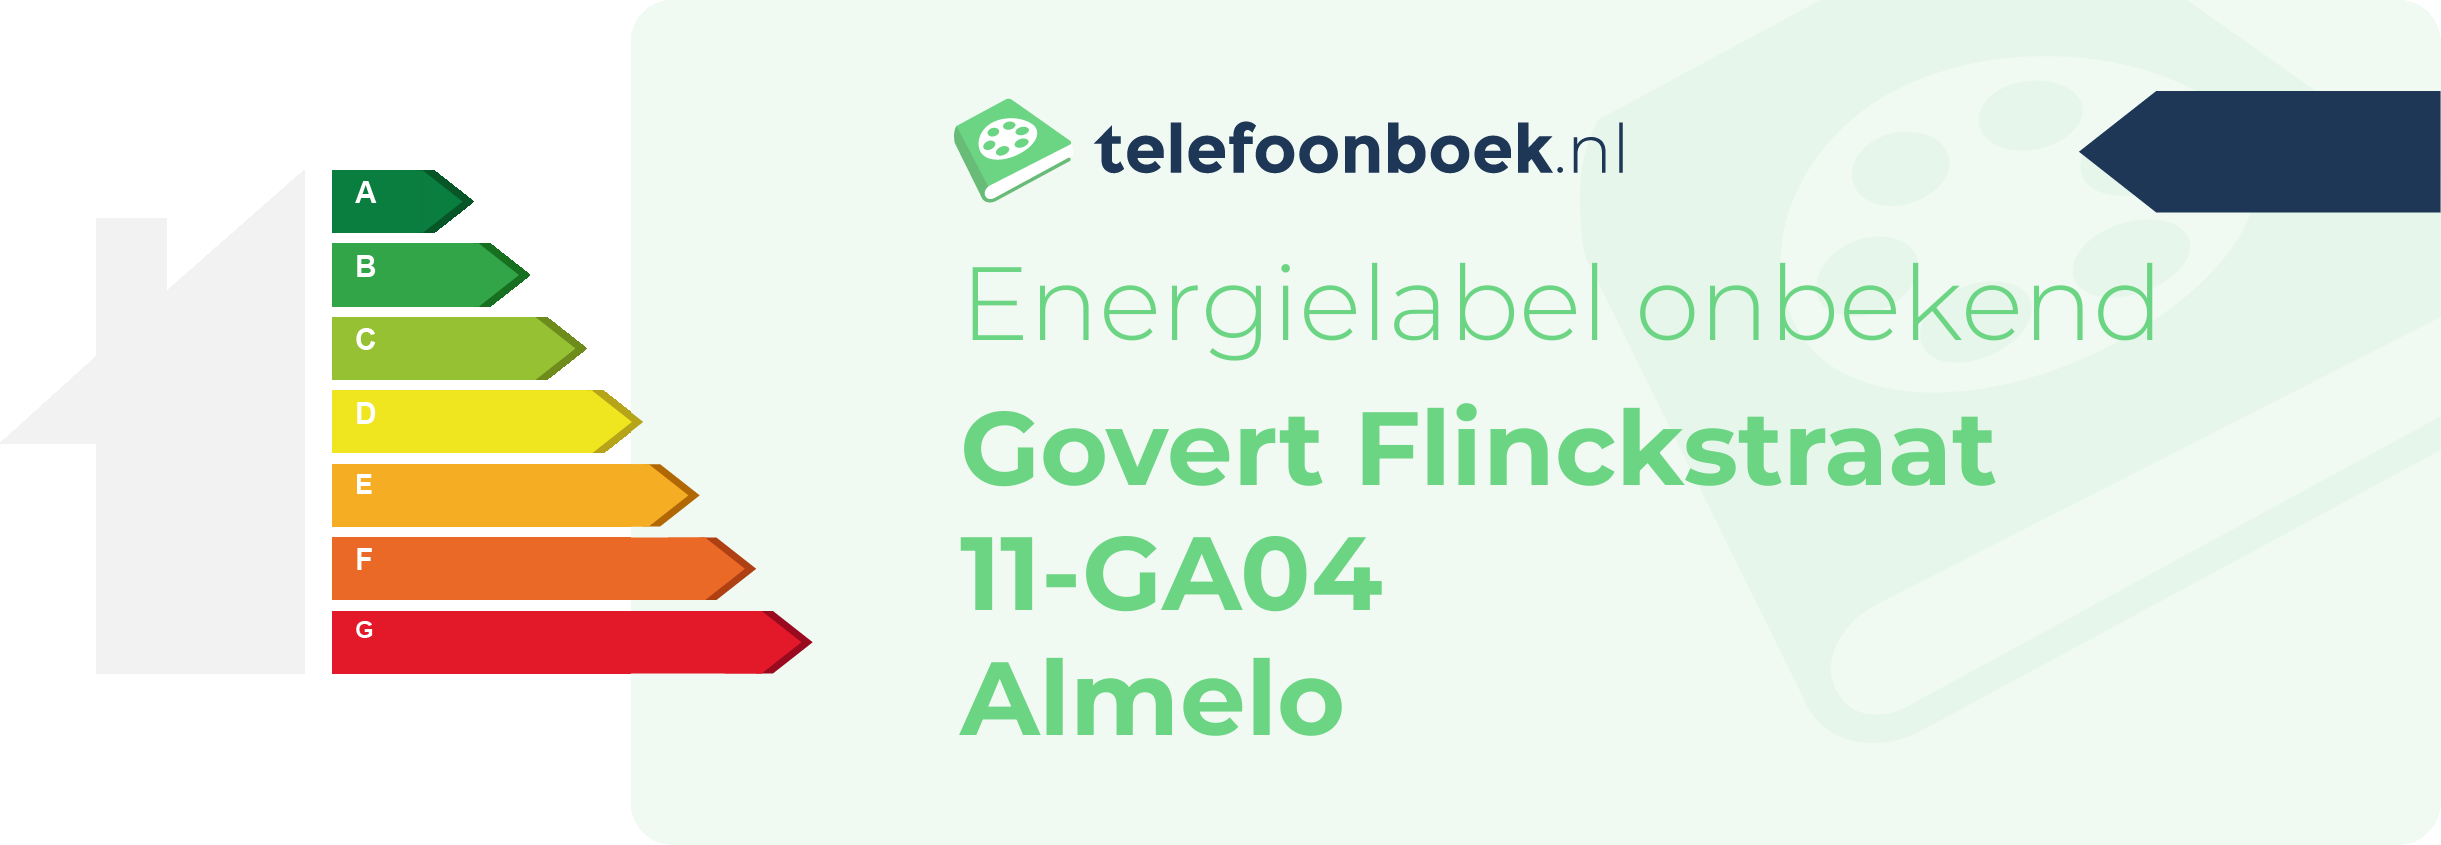 Energielabel Govert Flinckstraat 11-GA04 Almelo